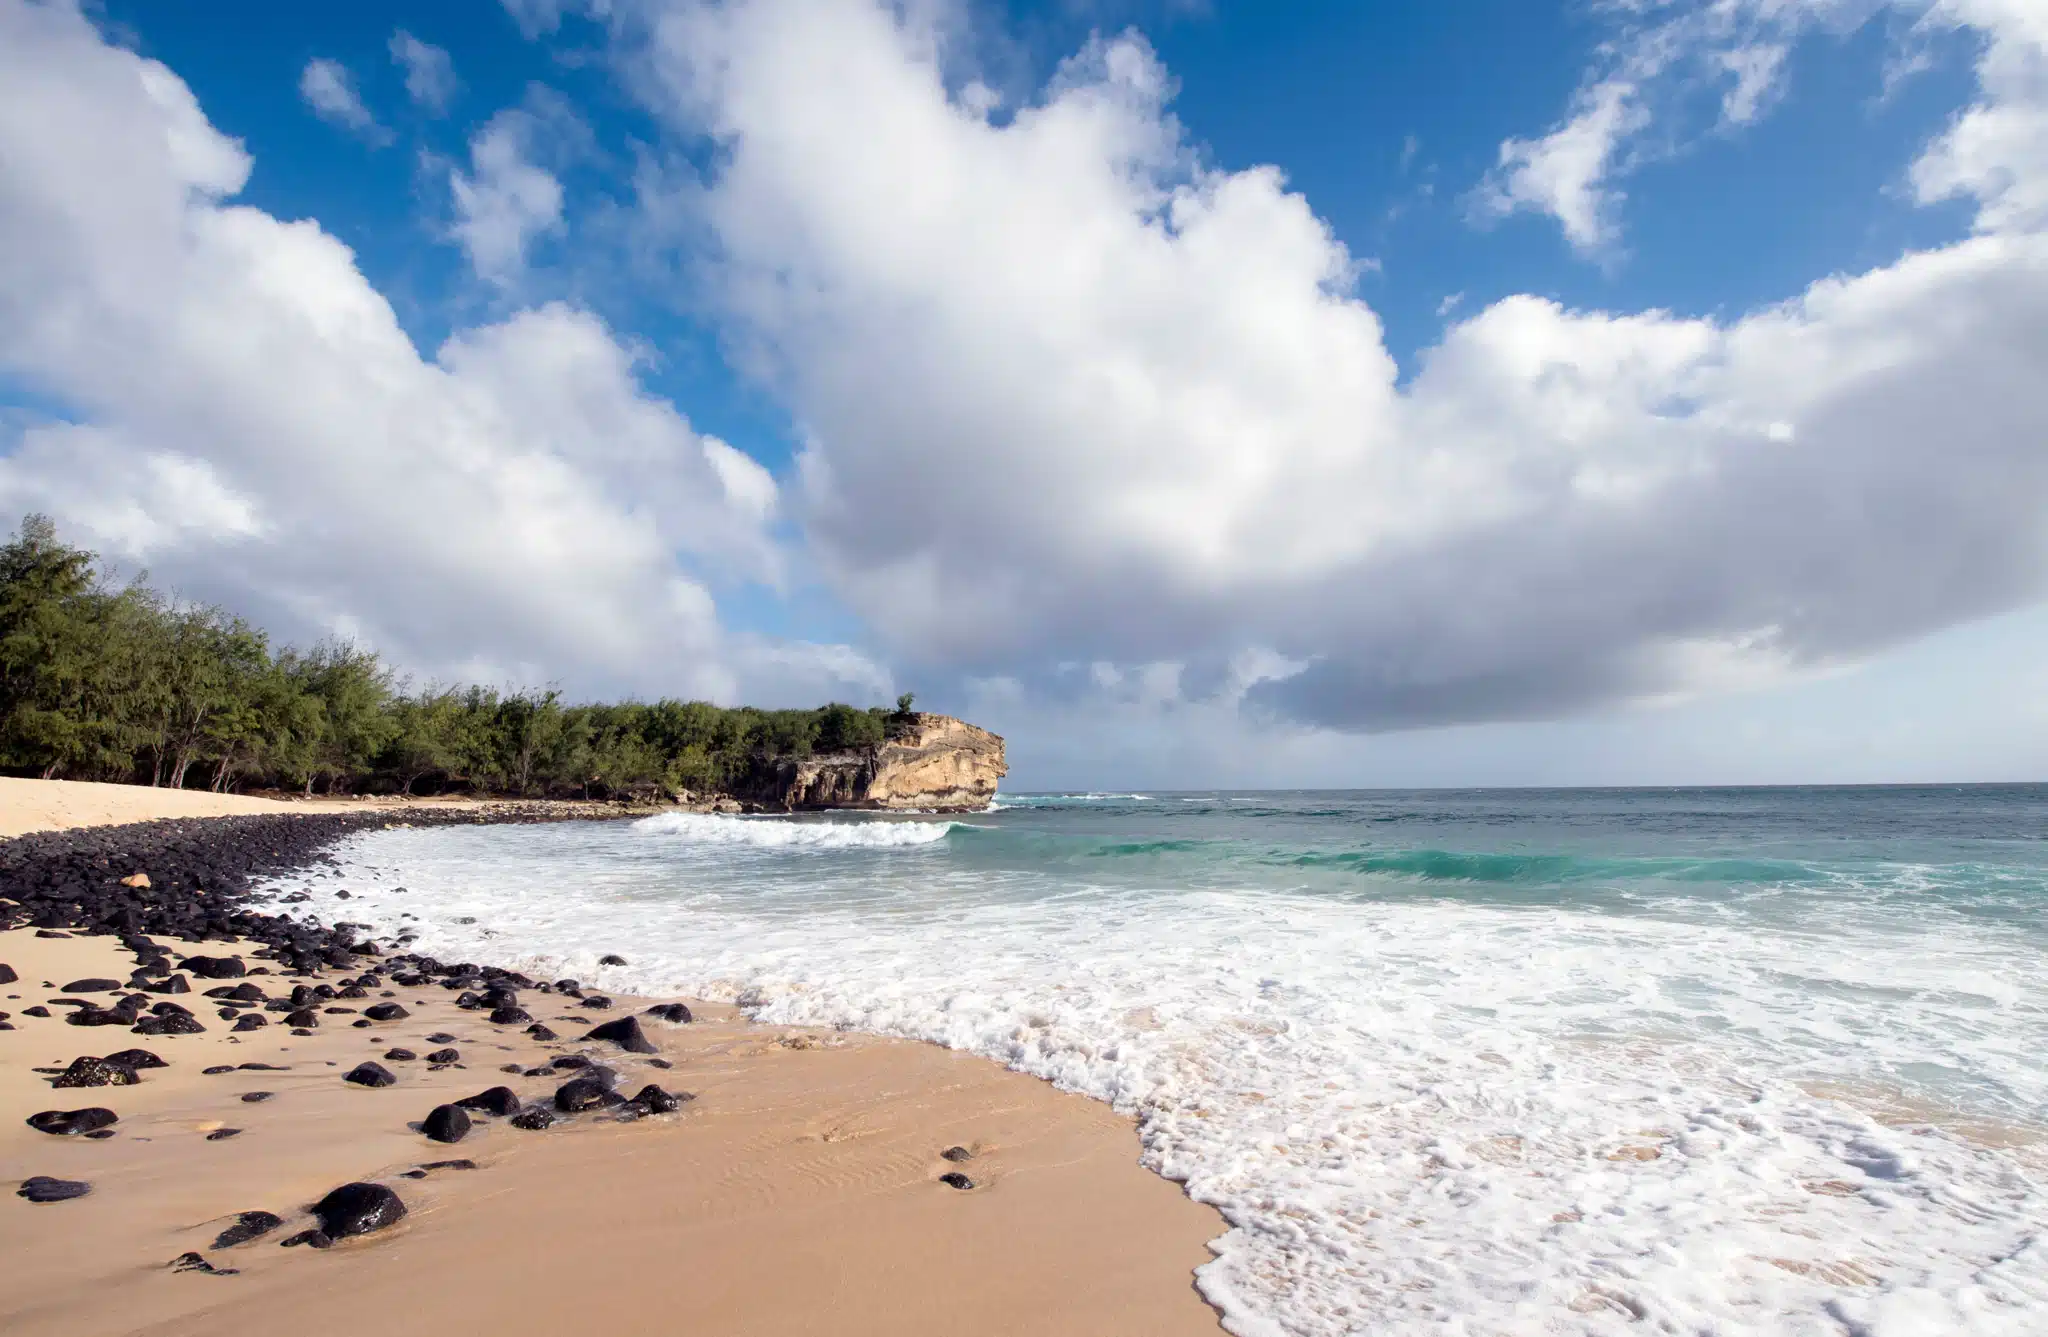 Shipwreck Beach is a Beach located in the city of Koloa on Kauai, Hawaii